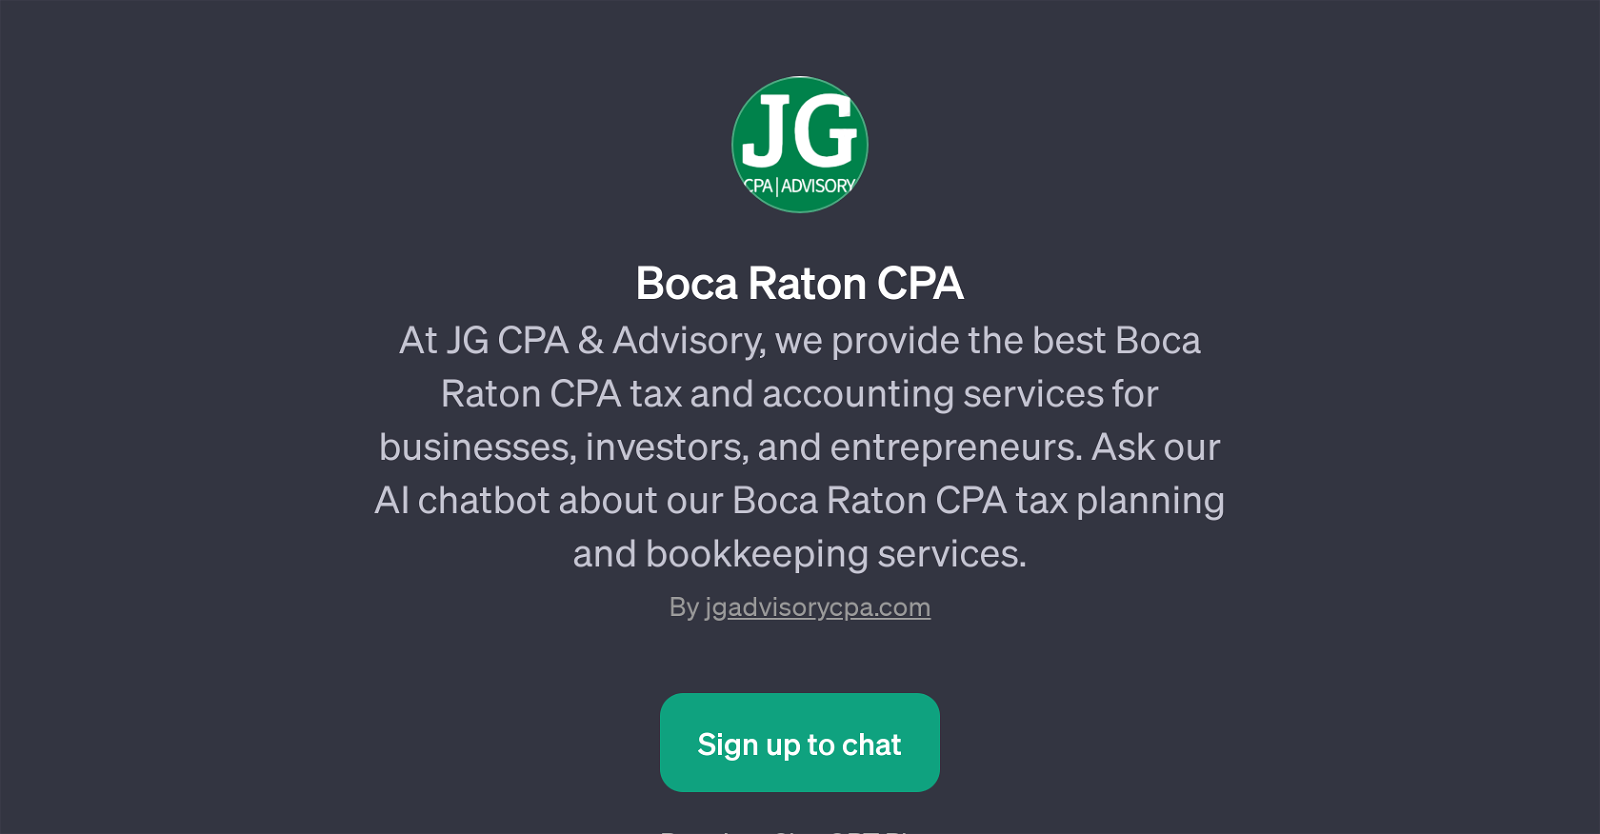 Boca Raton CPA website